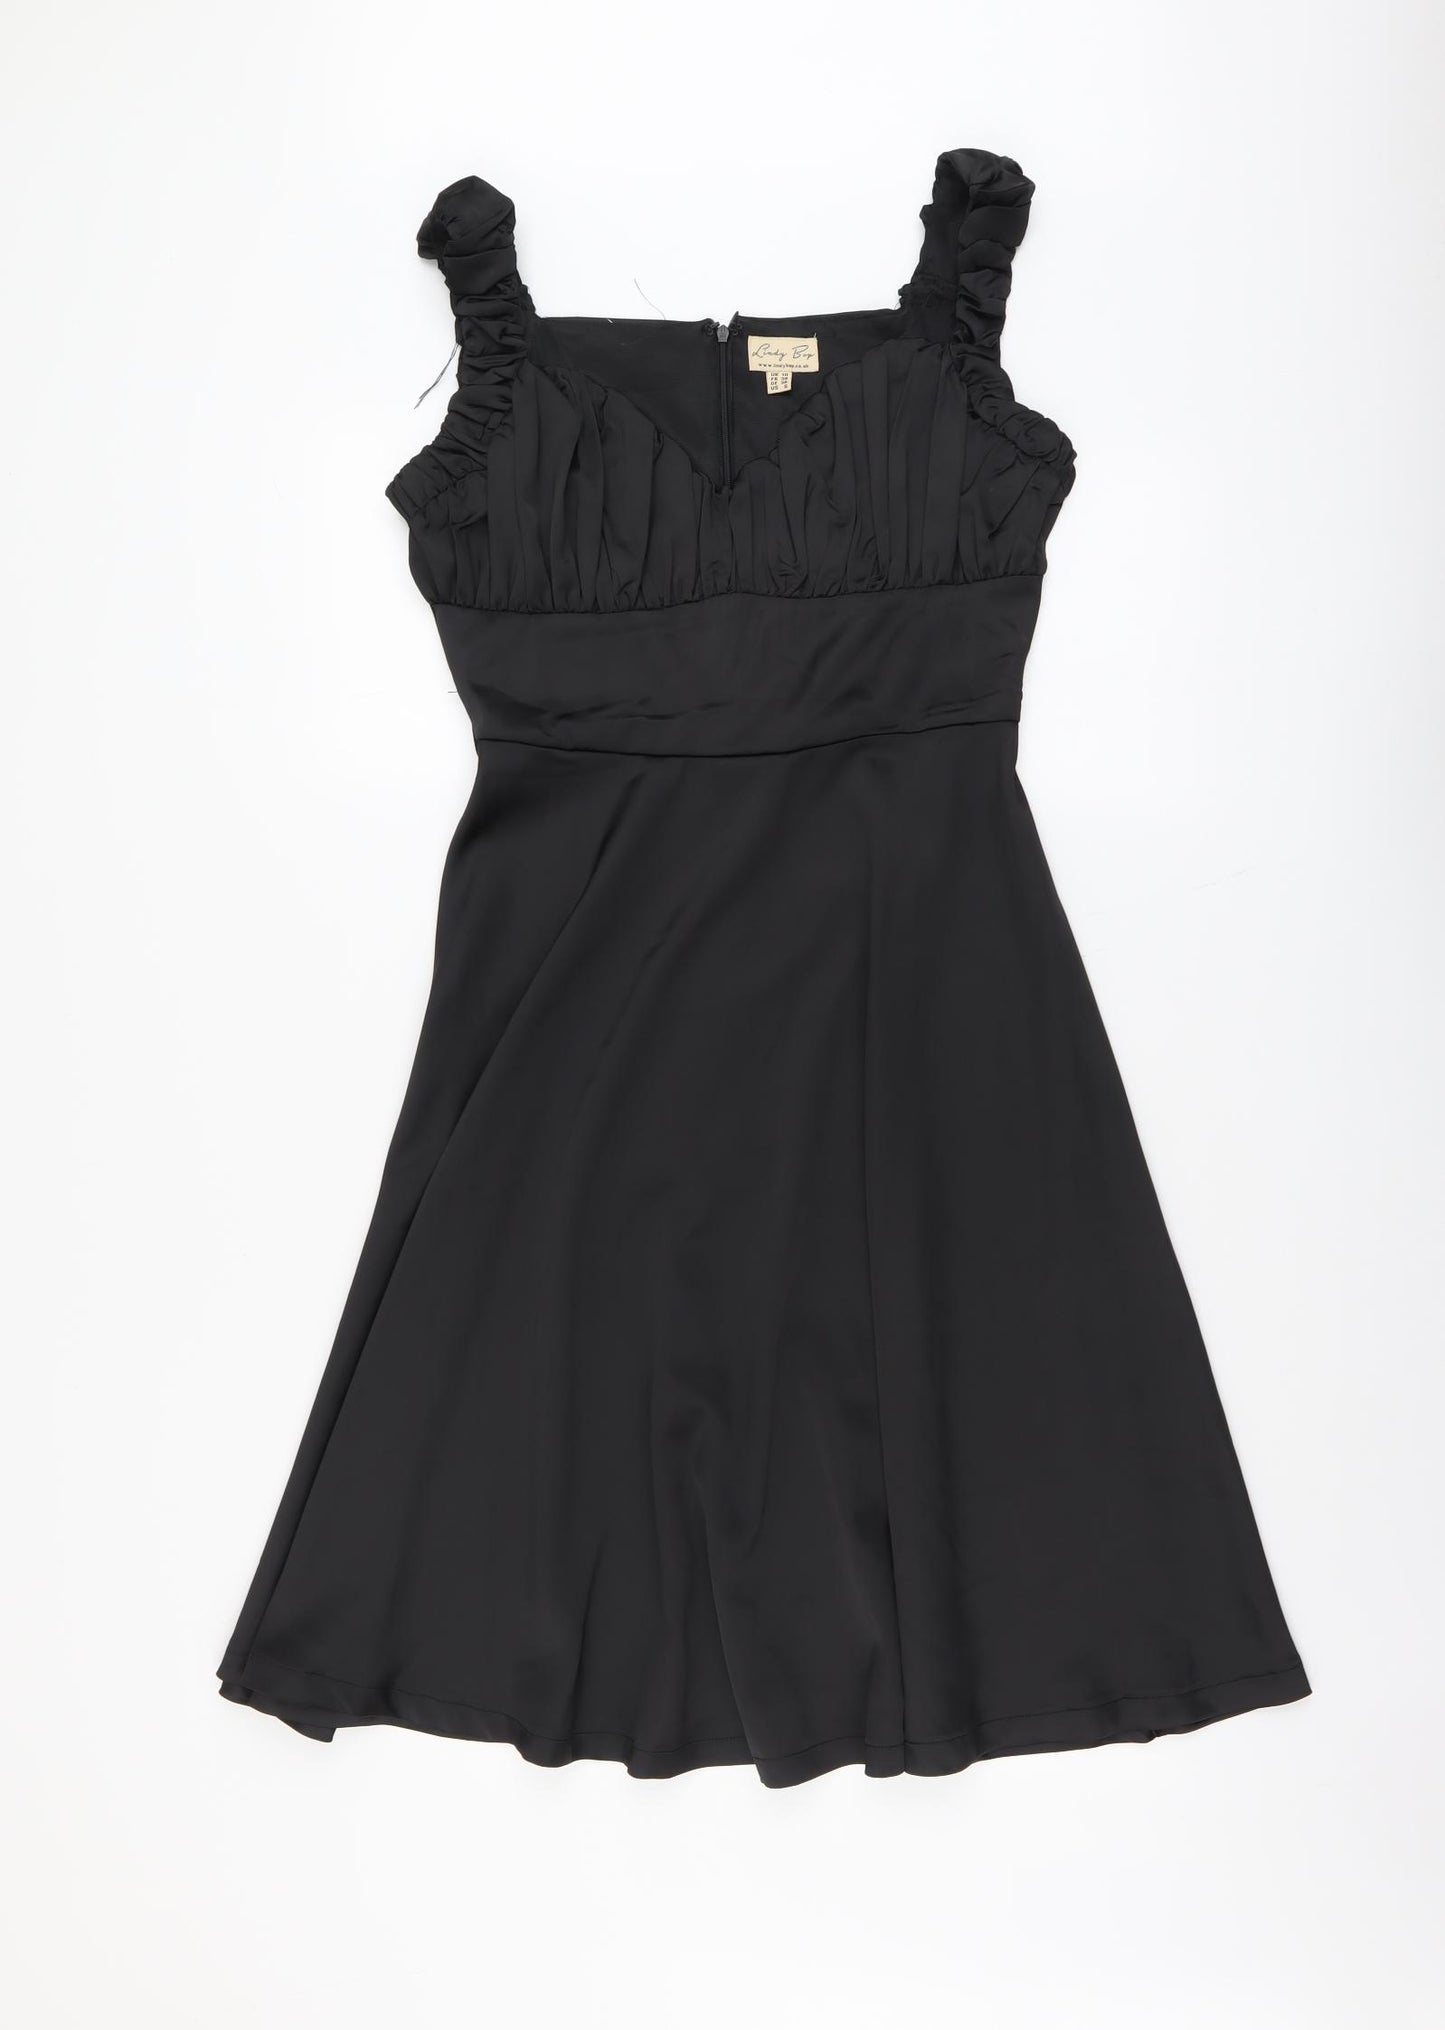 Lindy Bop Womens Black Polyester Skater Dress Size 10 Sweetheart Zip